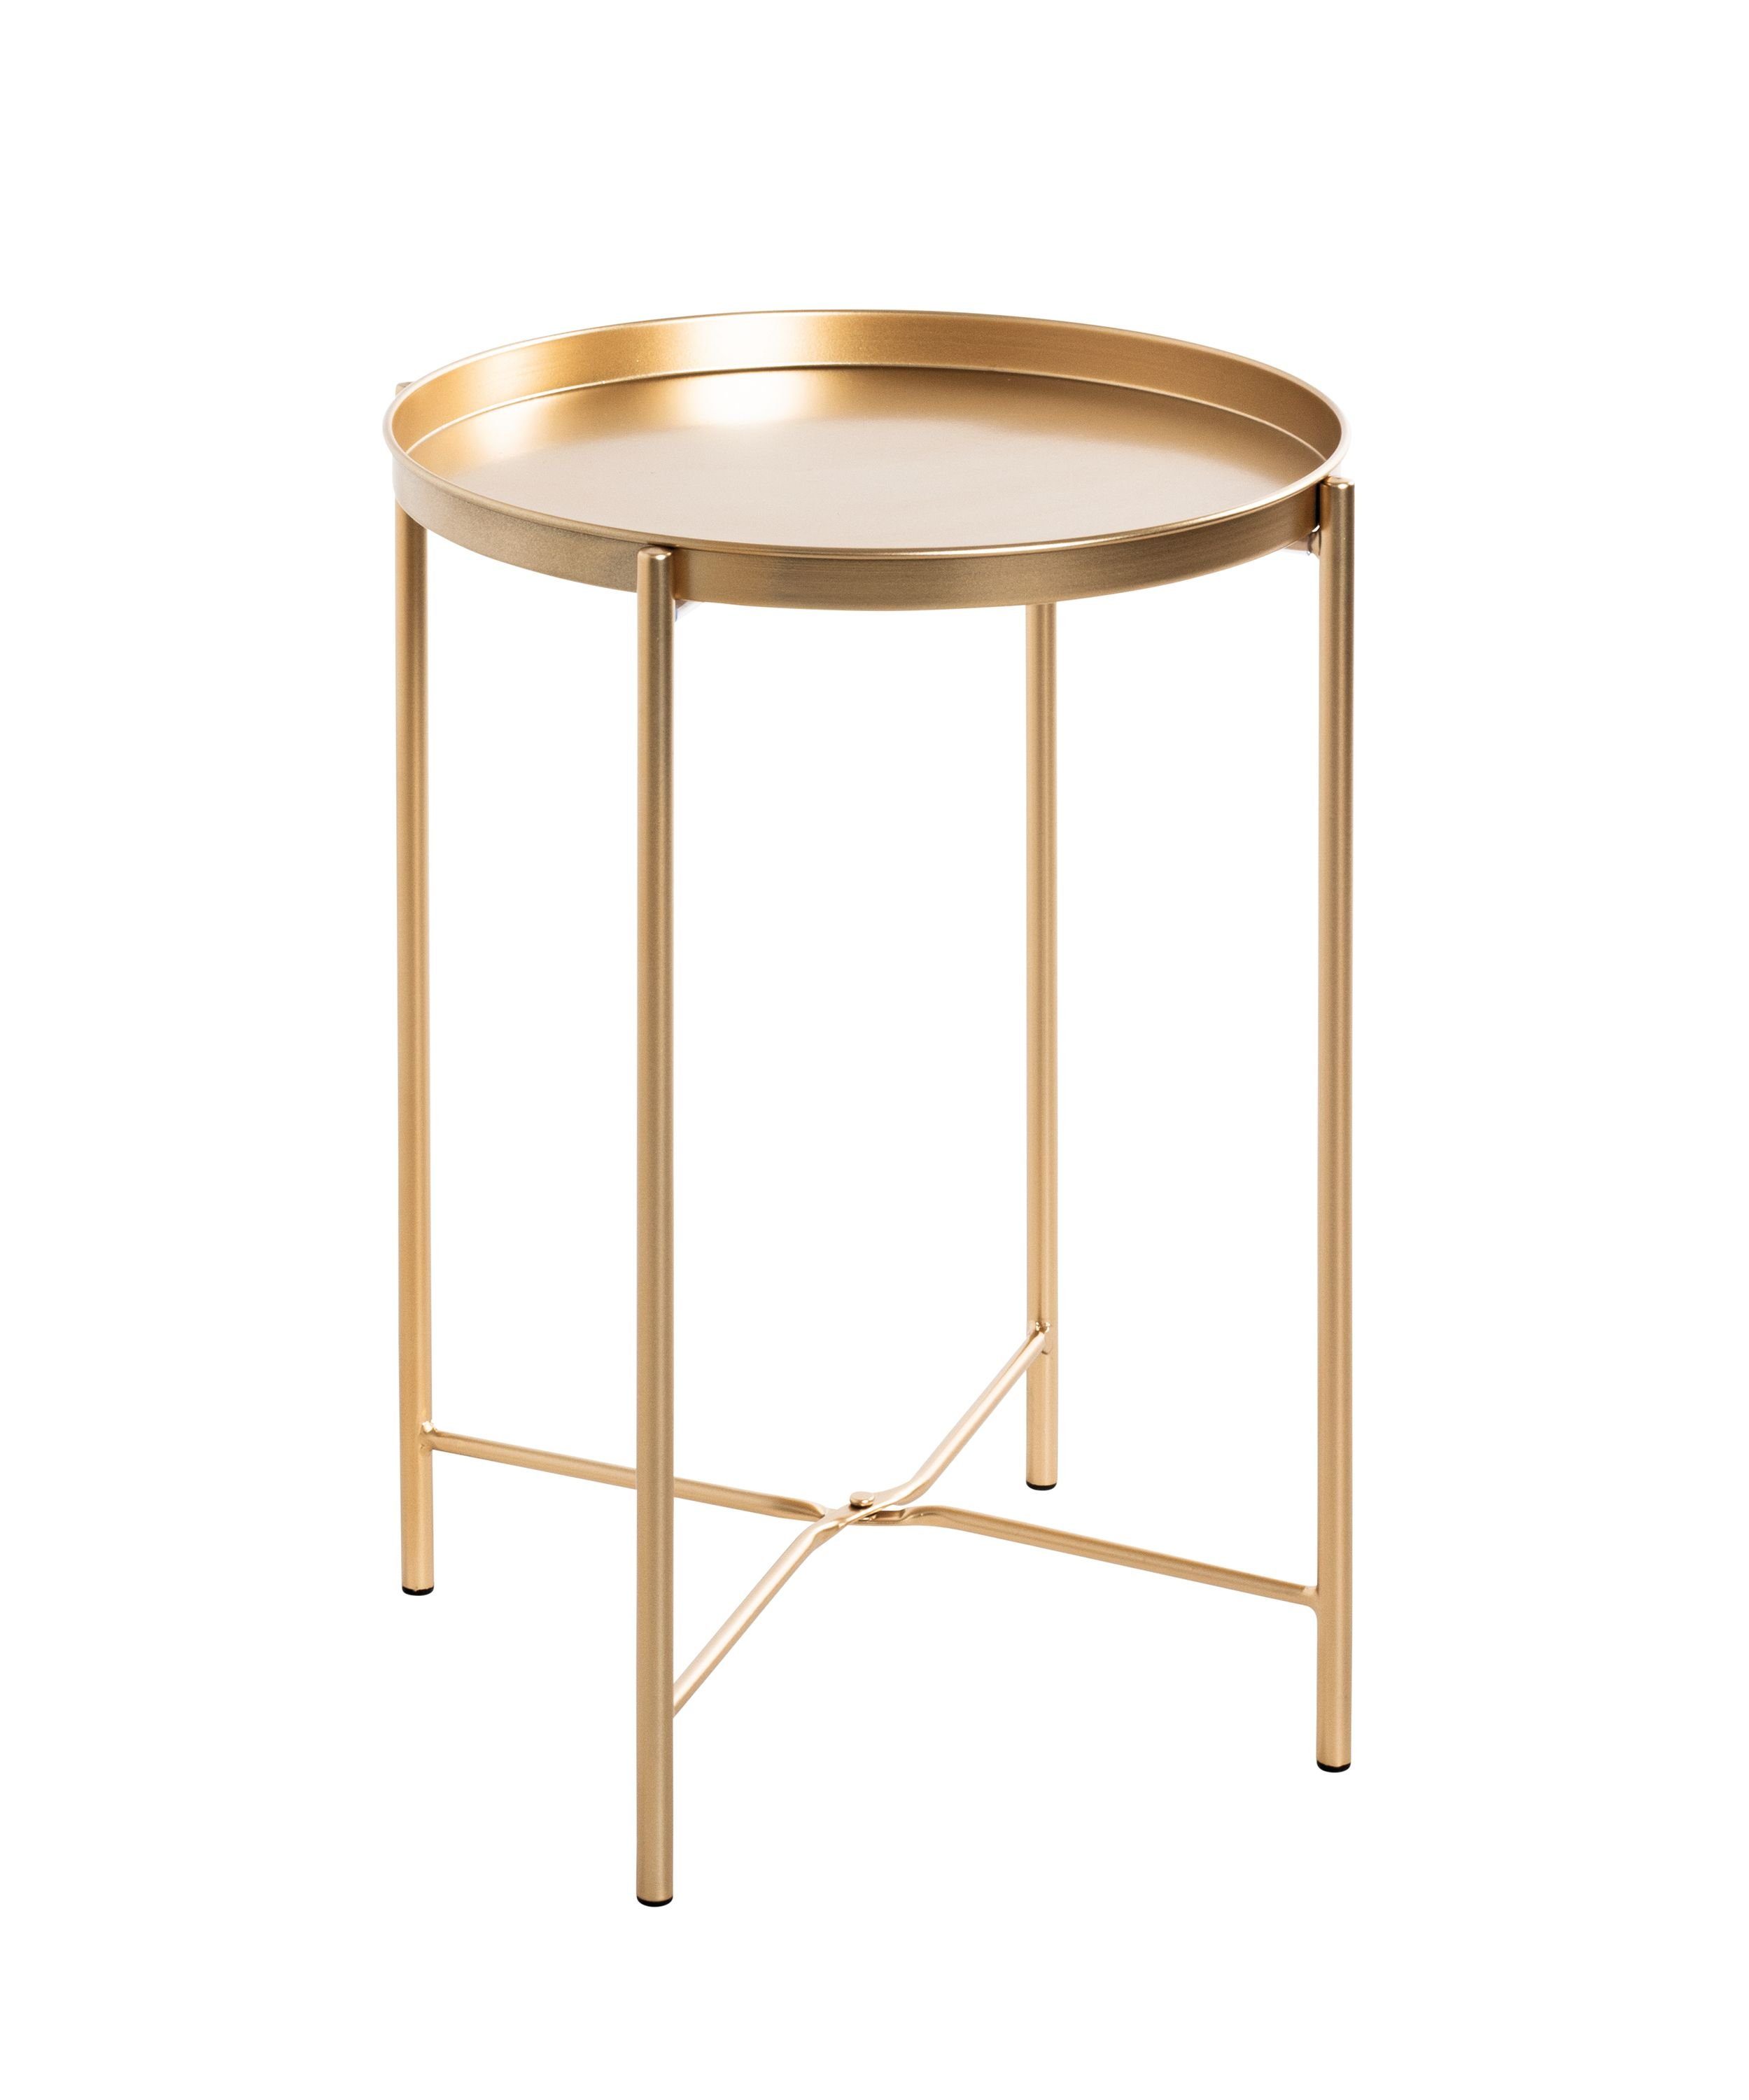 HAKU Beistelltisch Beistelltisch, cm (DH gold Kaffeetisch cm) Beistelltisch Möbel 39x50 39x50 HAKU DH